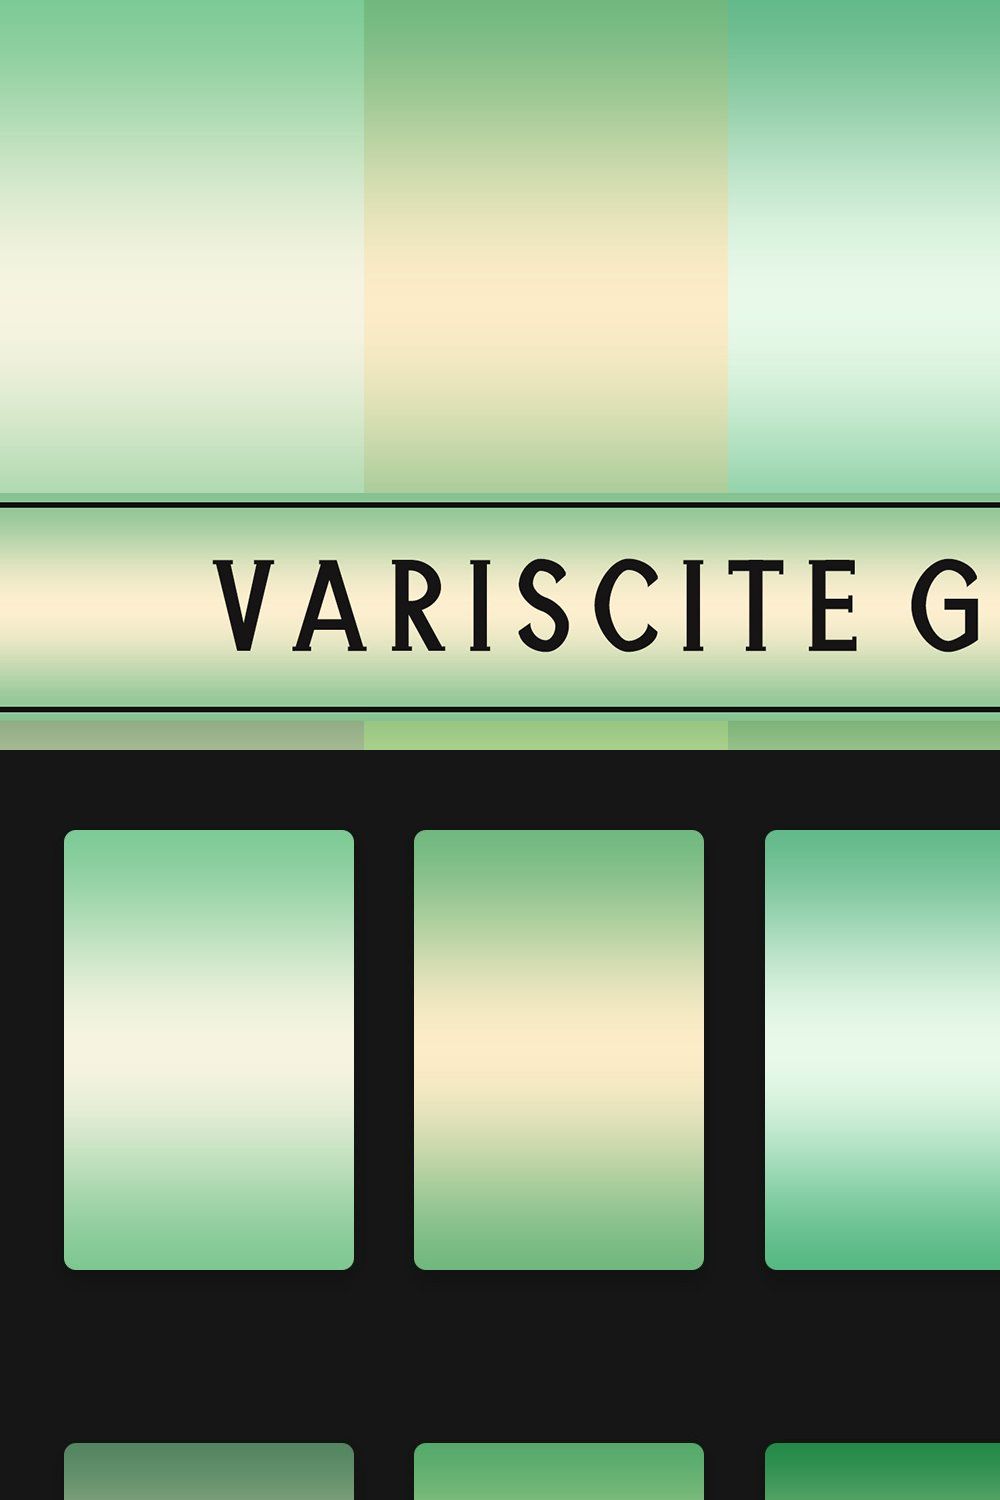 Variscite Gradients pinterest preview image.